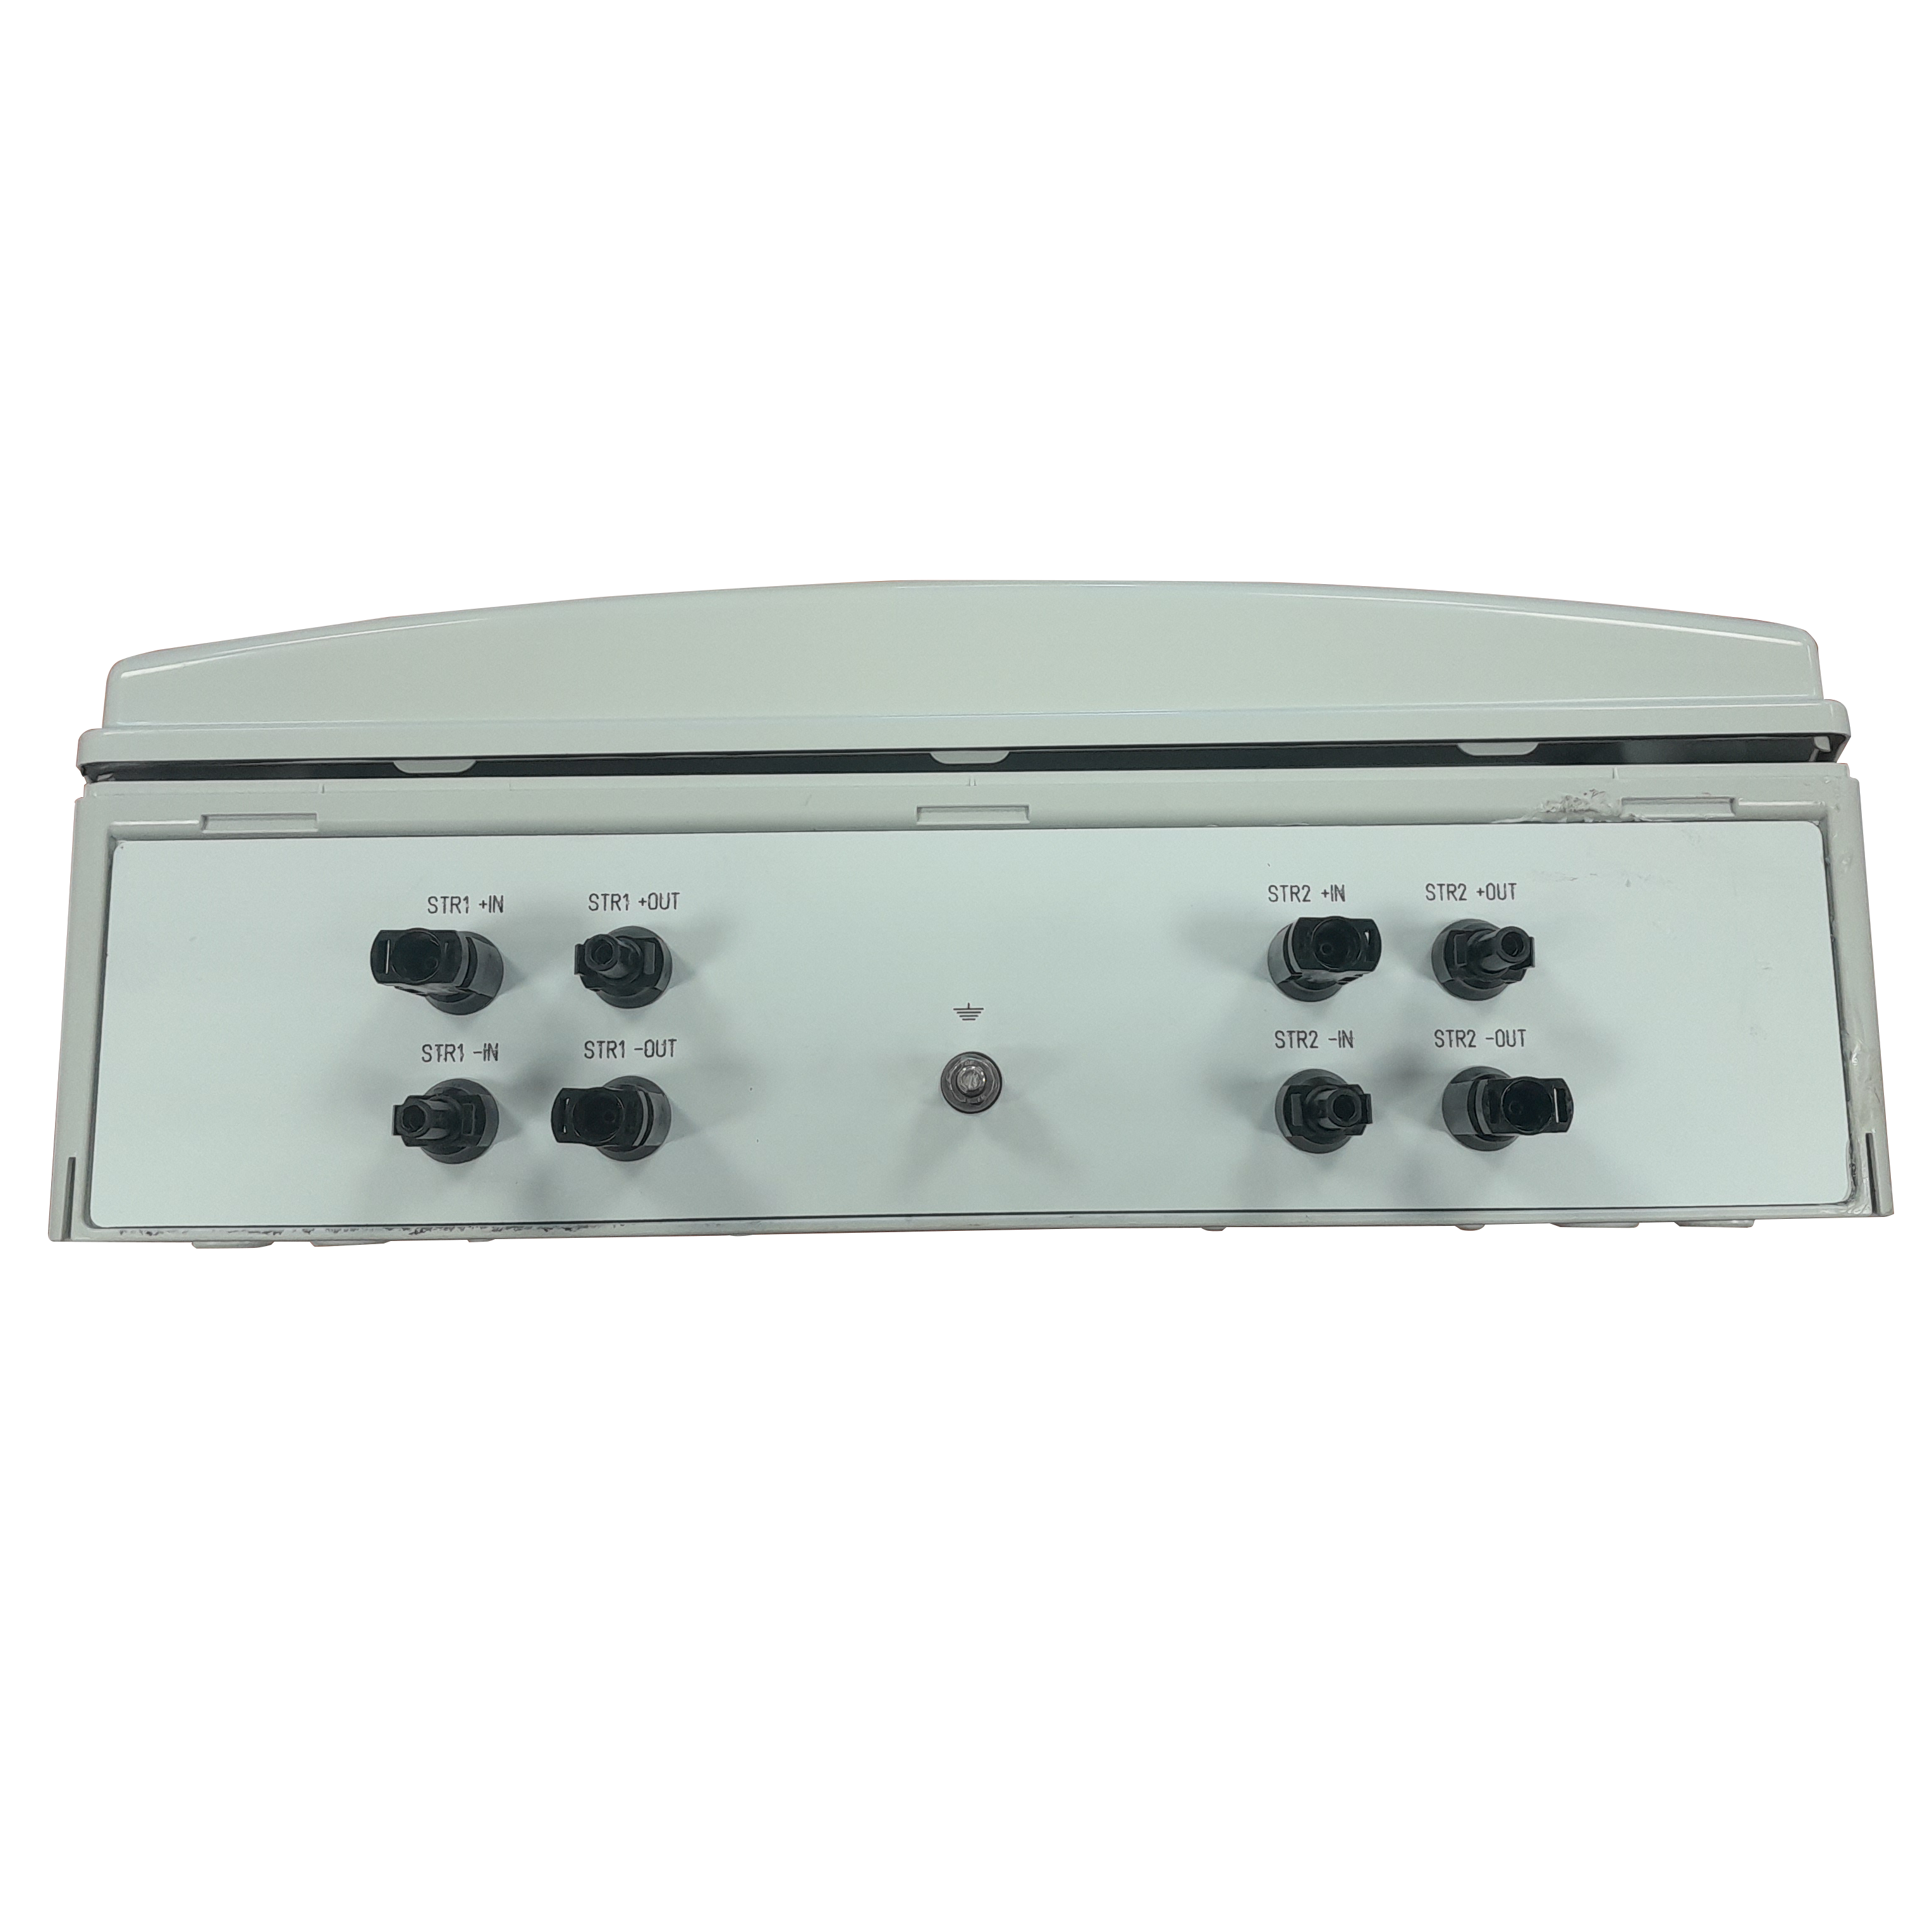 NEX Protection box, isolator, 2 string, 2 MPPT, 600V, T2 SPD